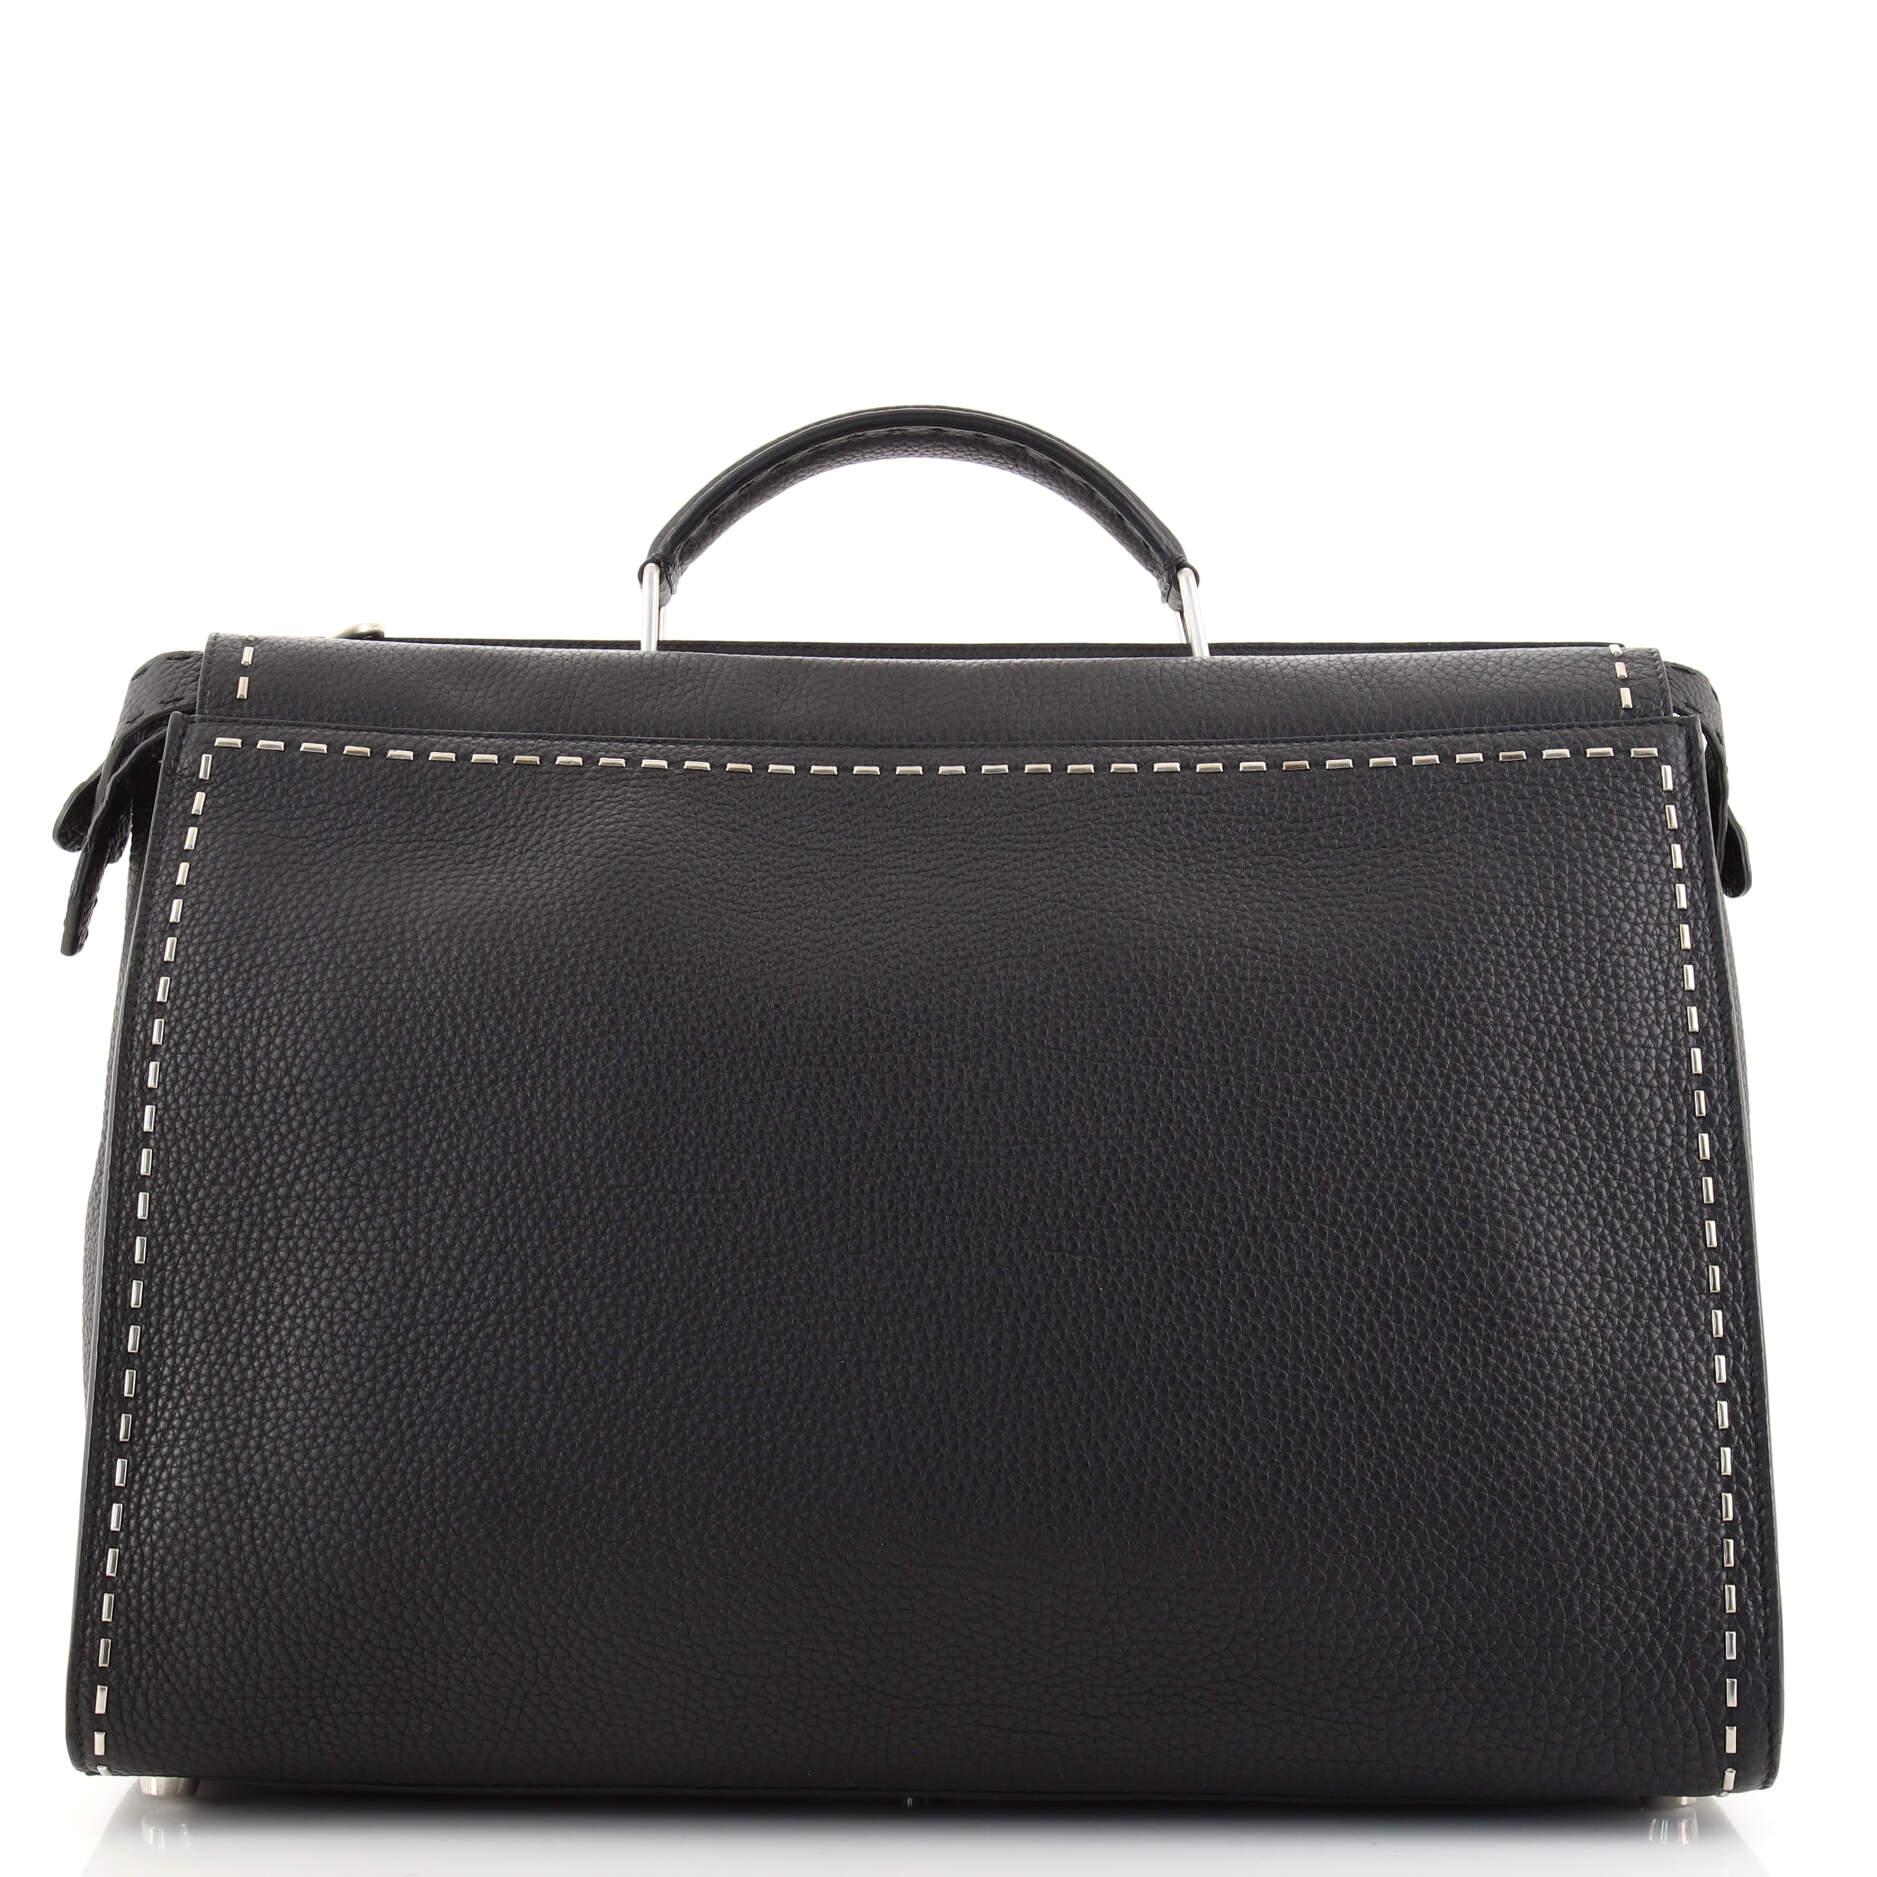 Black Fendi Selleria Peekaboo Bag Leather with Studded Detail XL